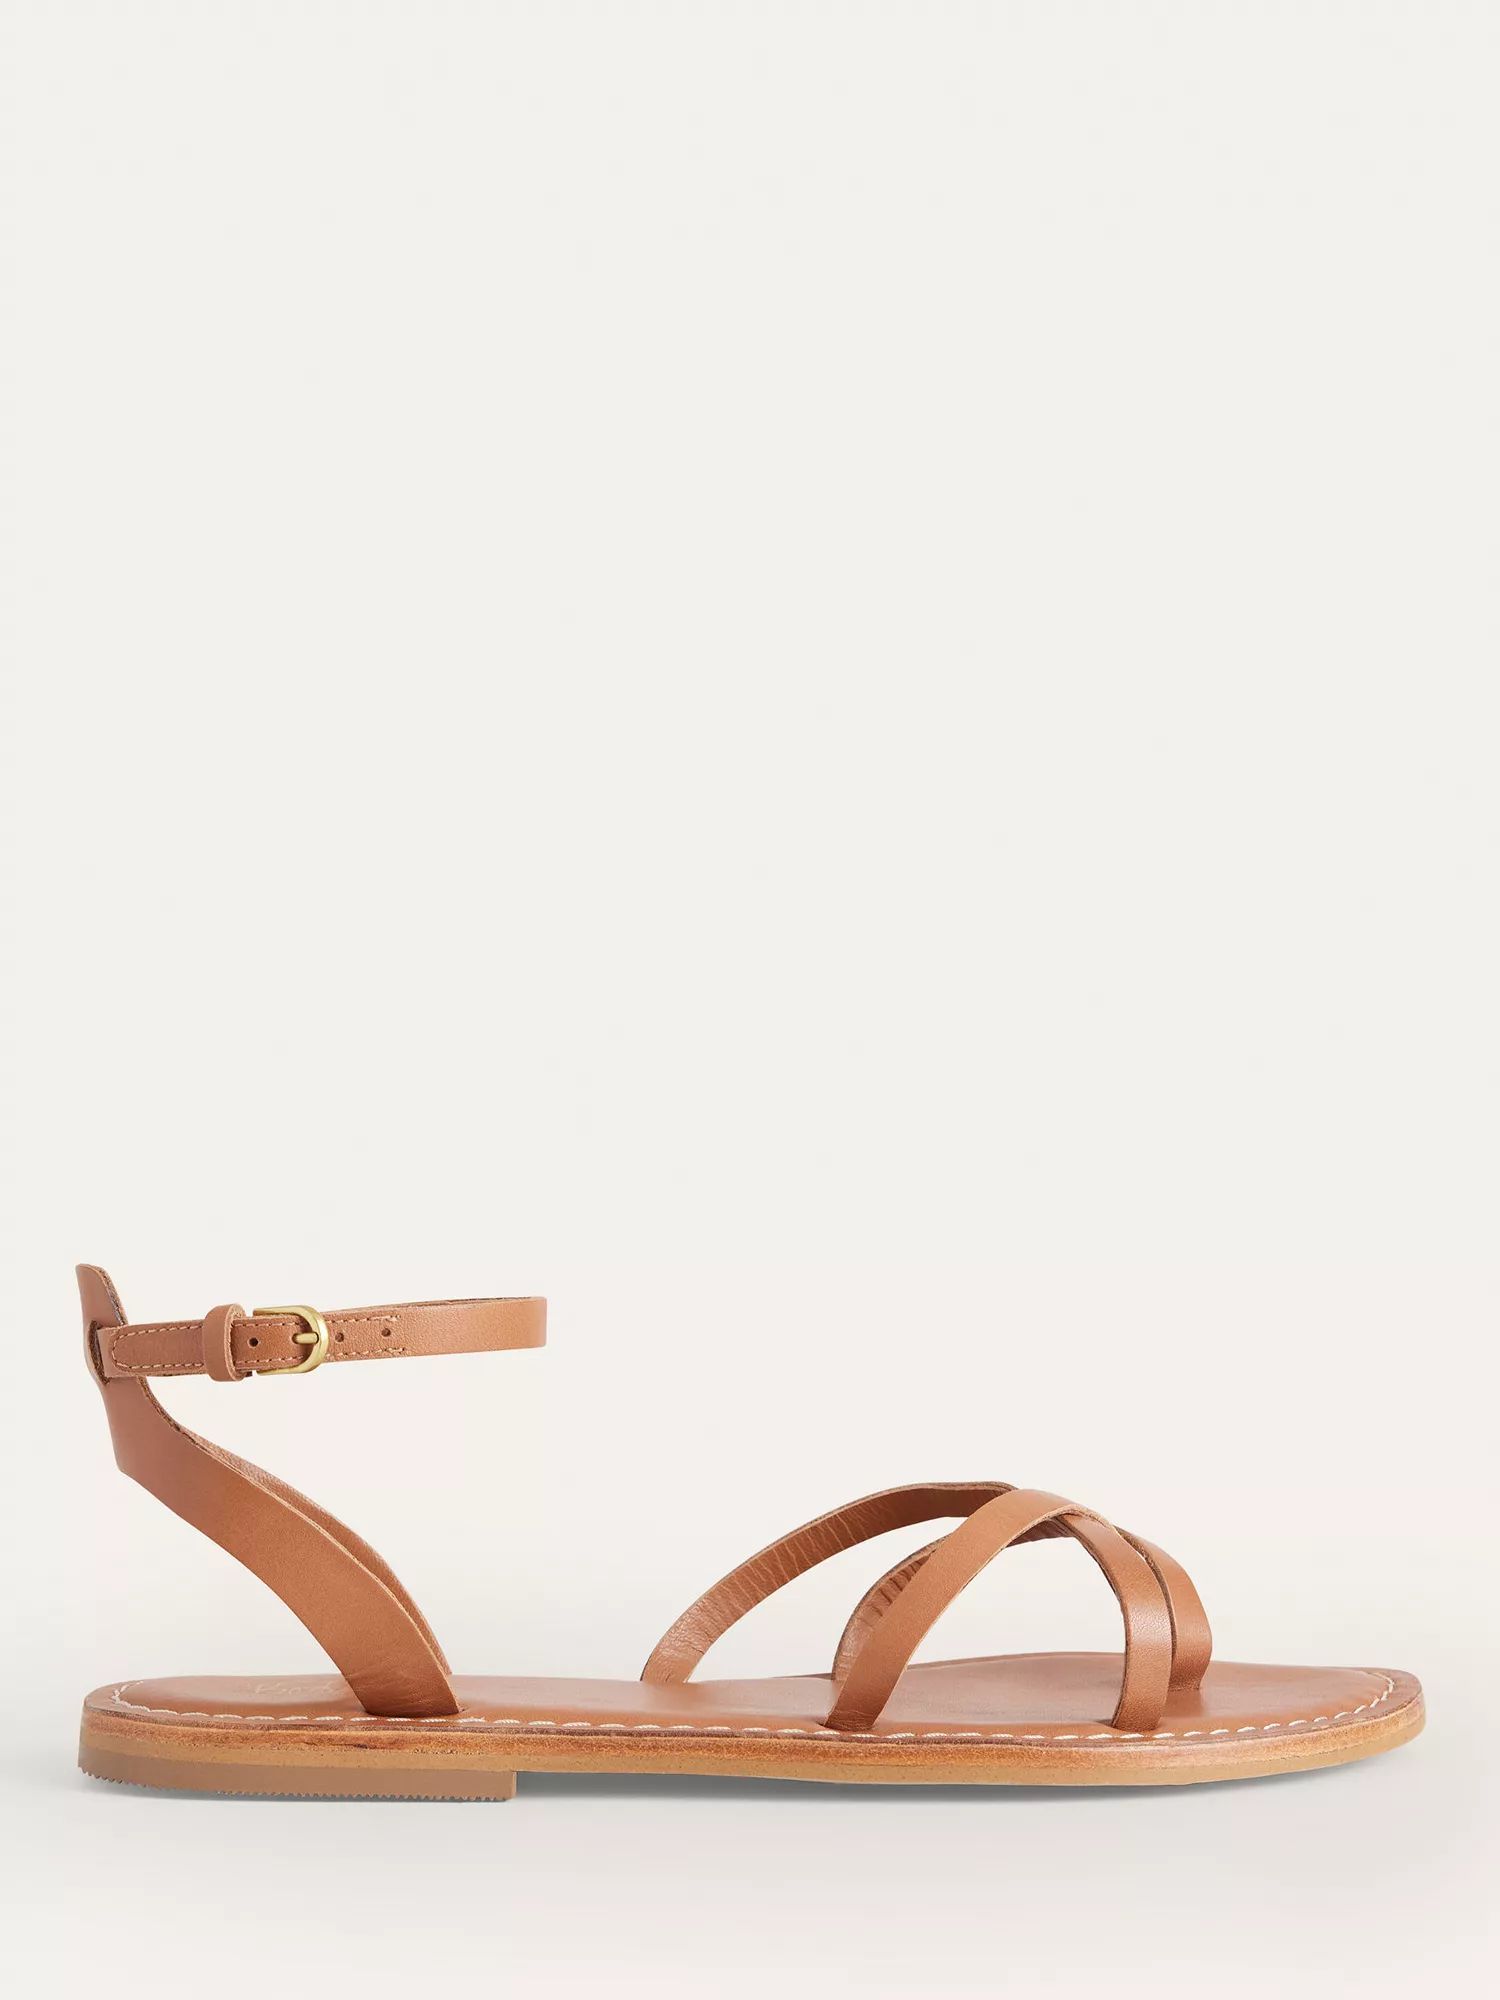 Boden Leather Flat Sandals, Tan | John Lewis (UK)